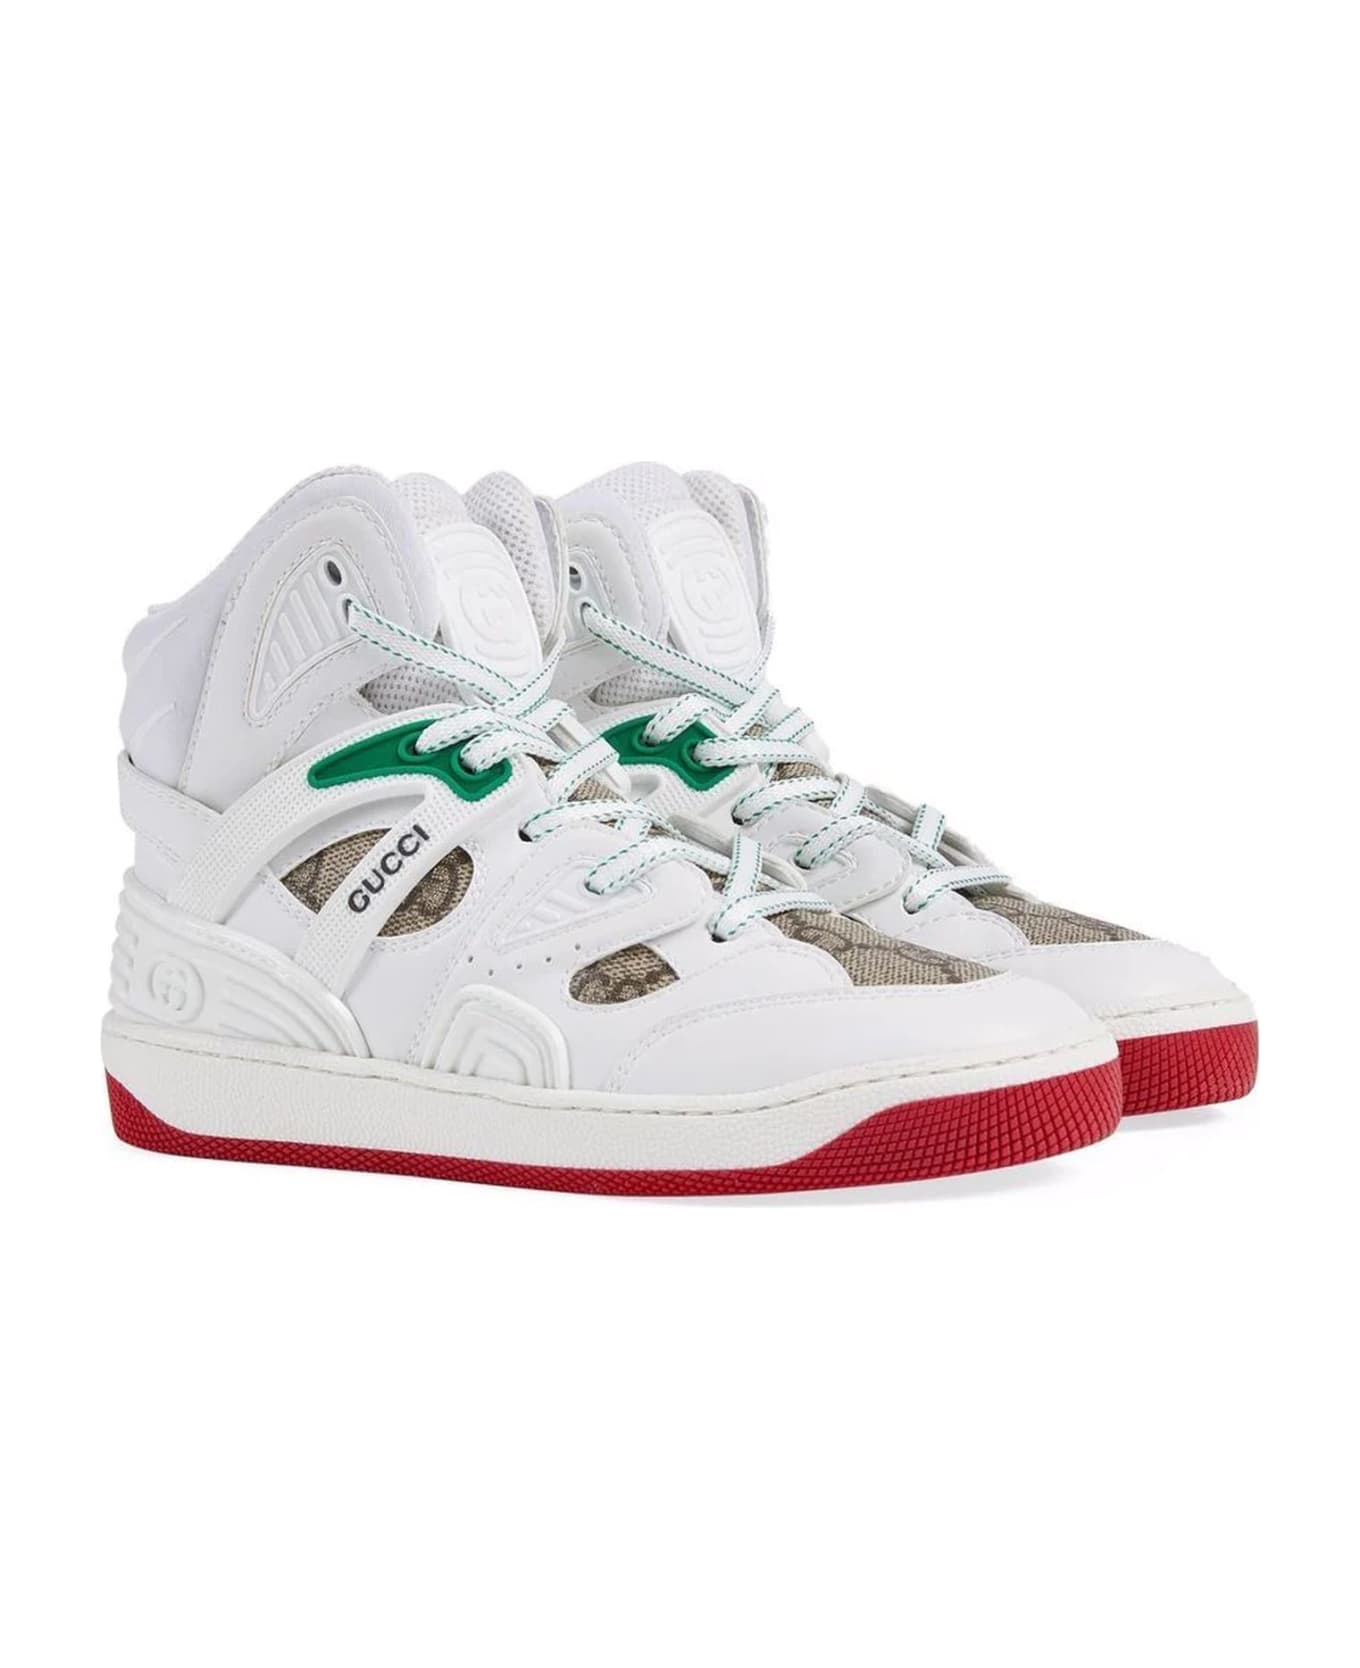 Gucci White Canvas Sneakers - Bianco